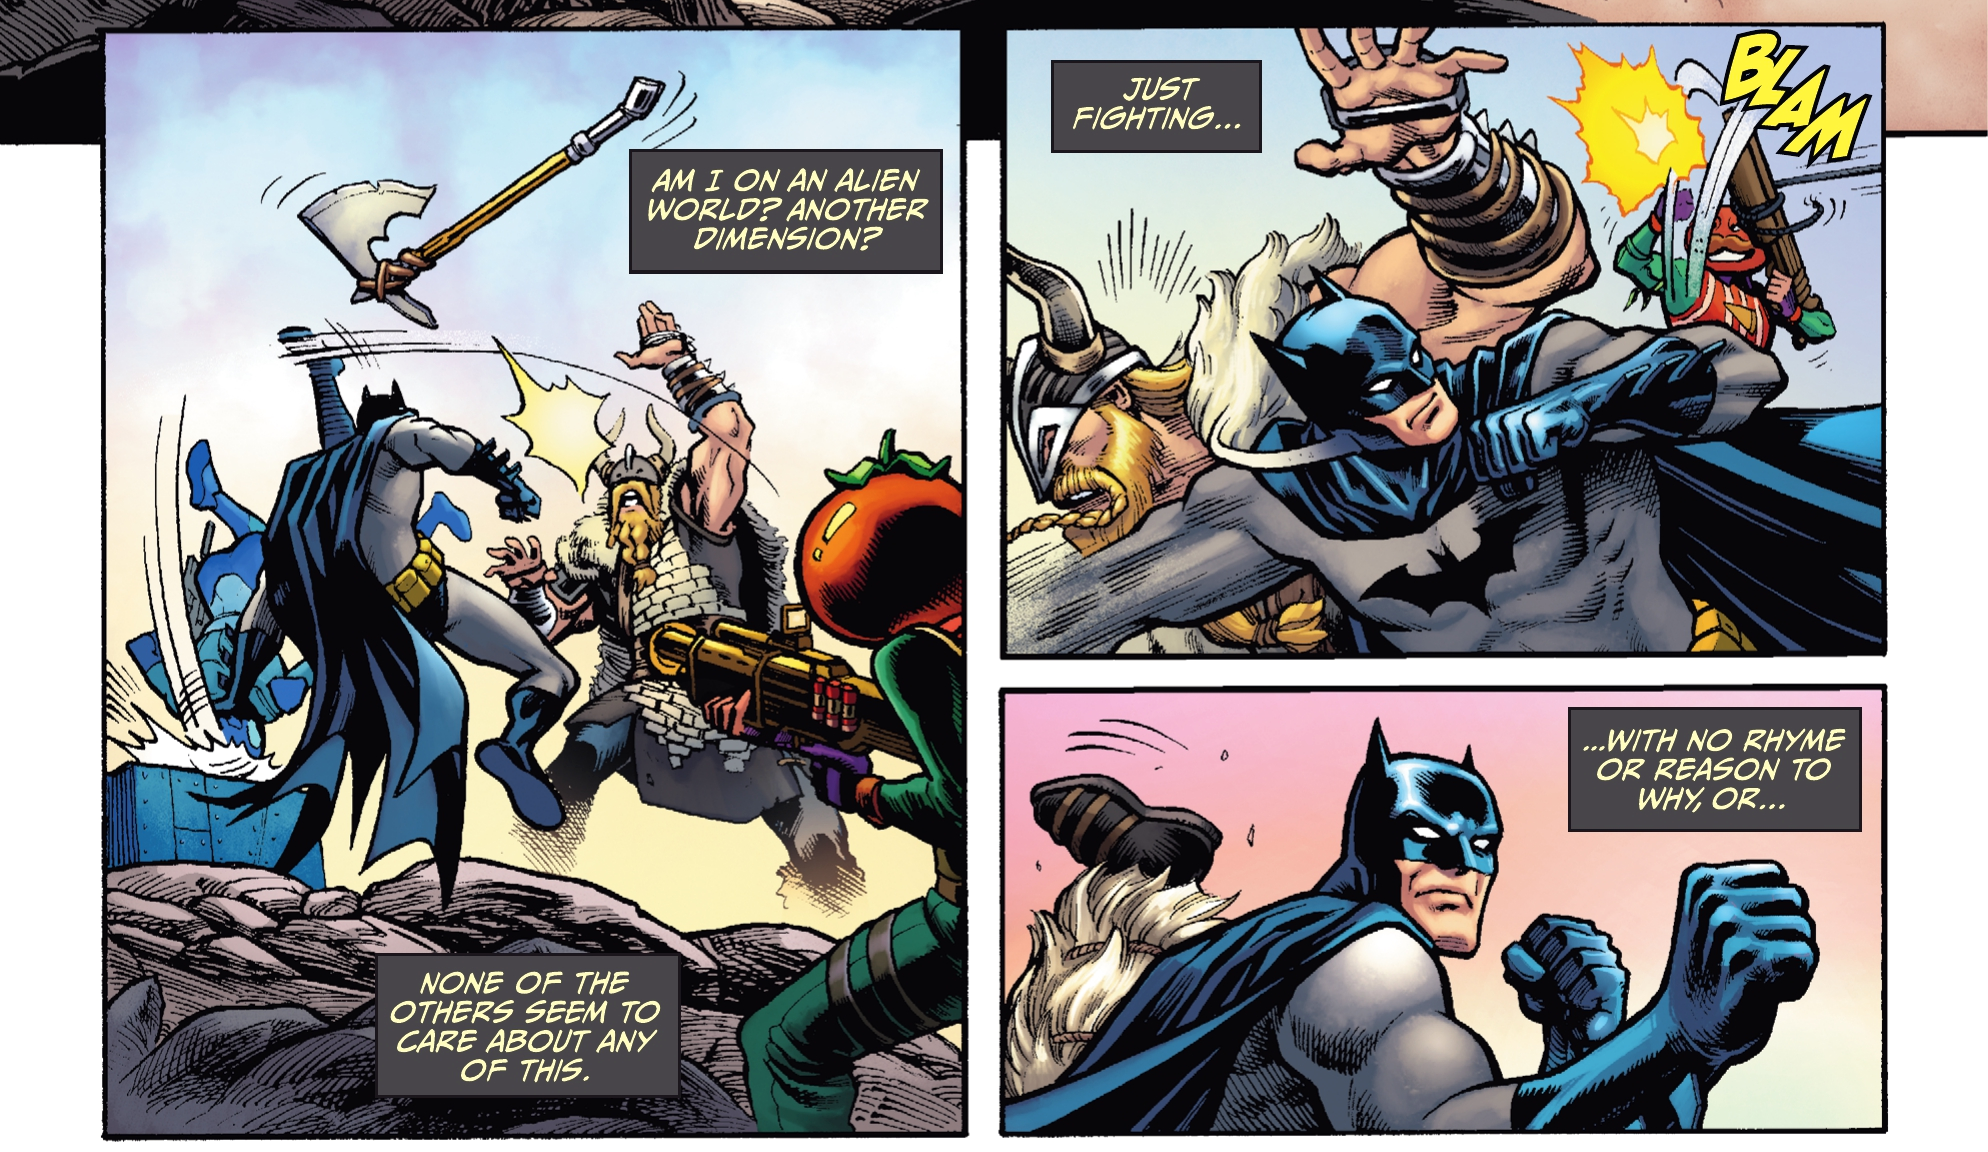 Image: Reilly Brown, Nelson Faro DeCastro, John Kalisz, and Andworld Design/DC Comics